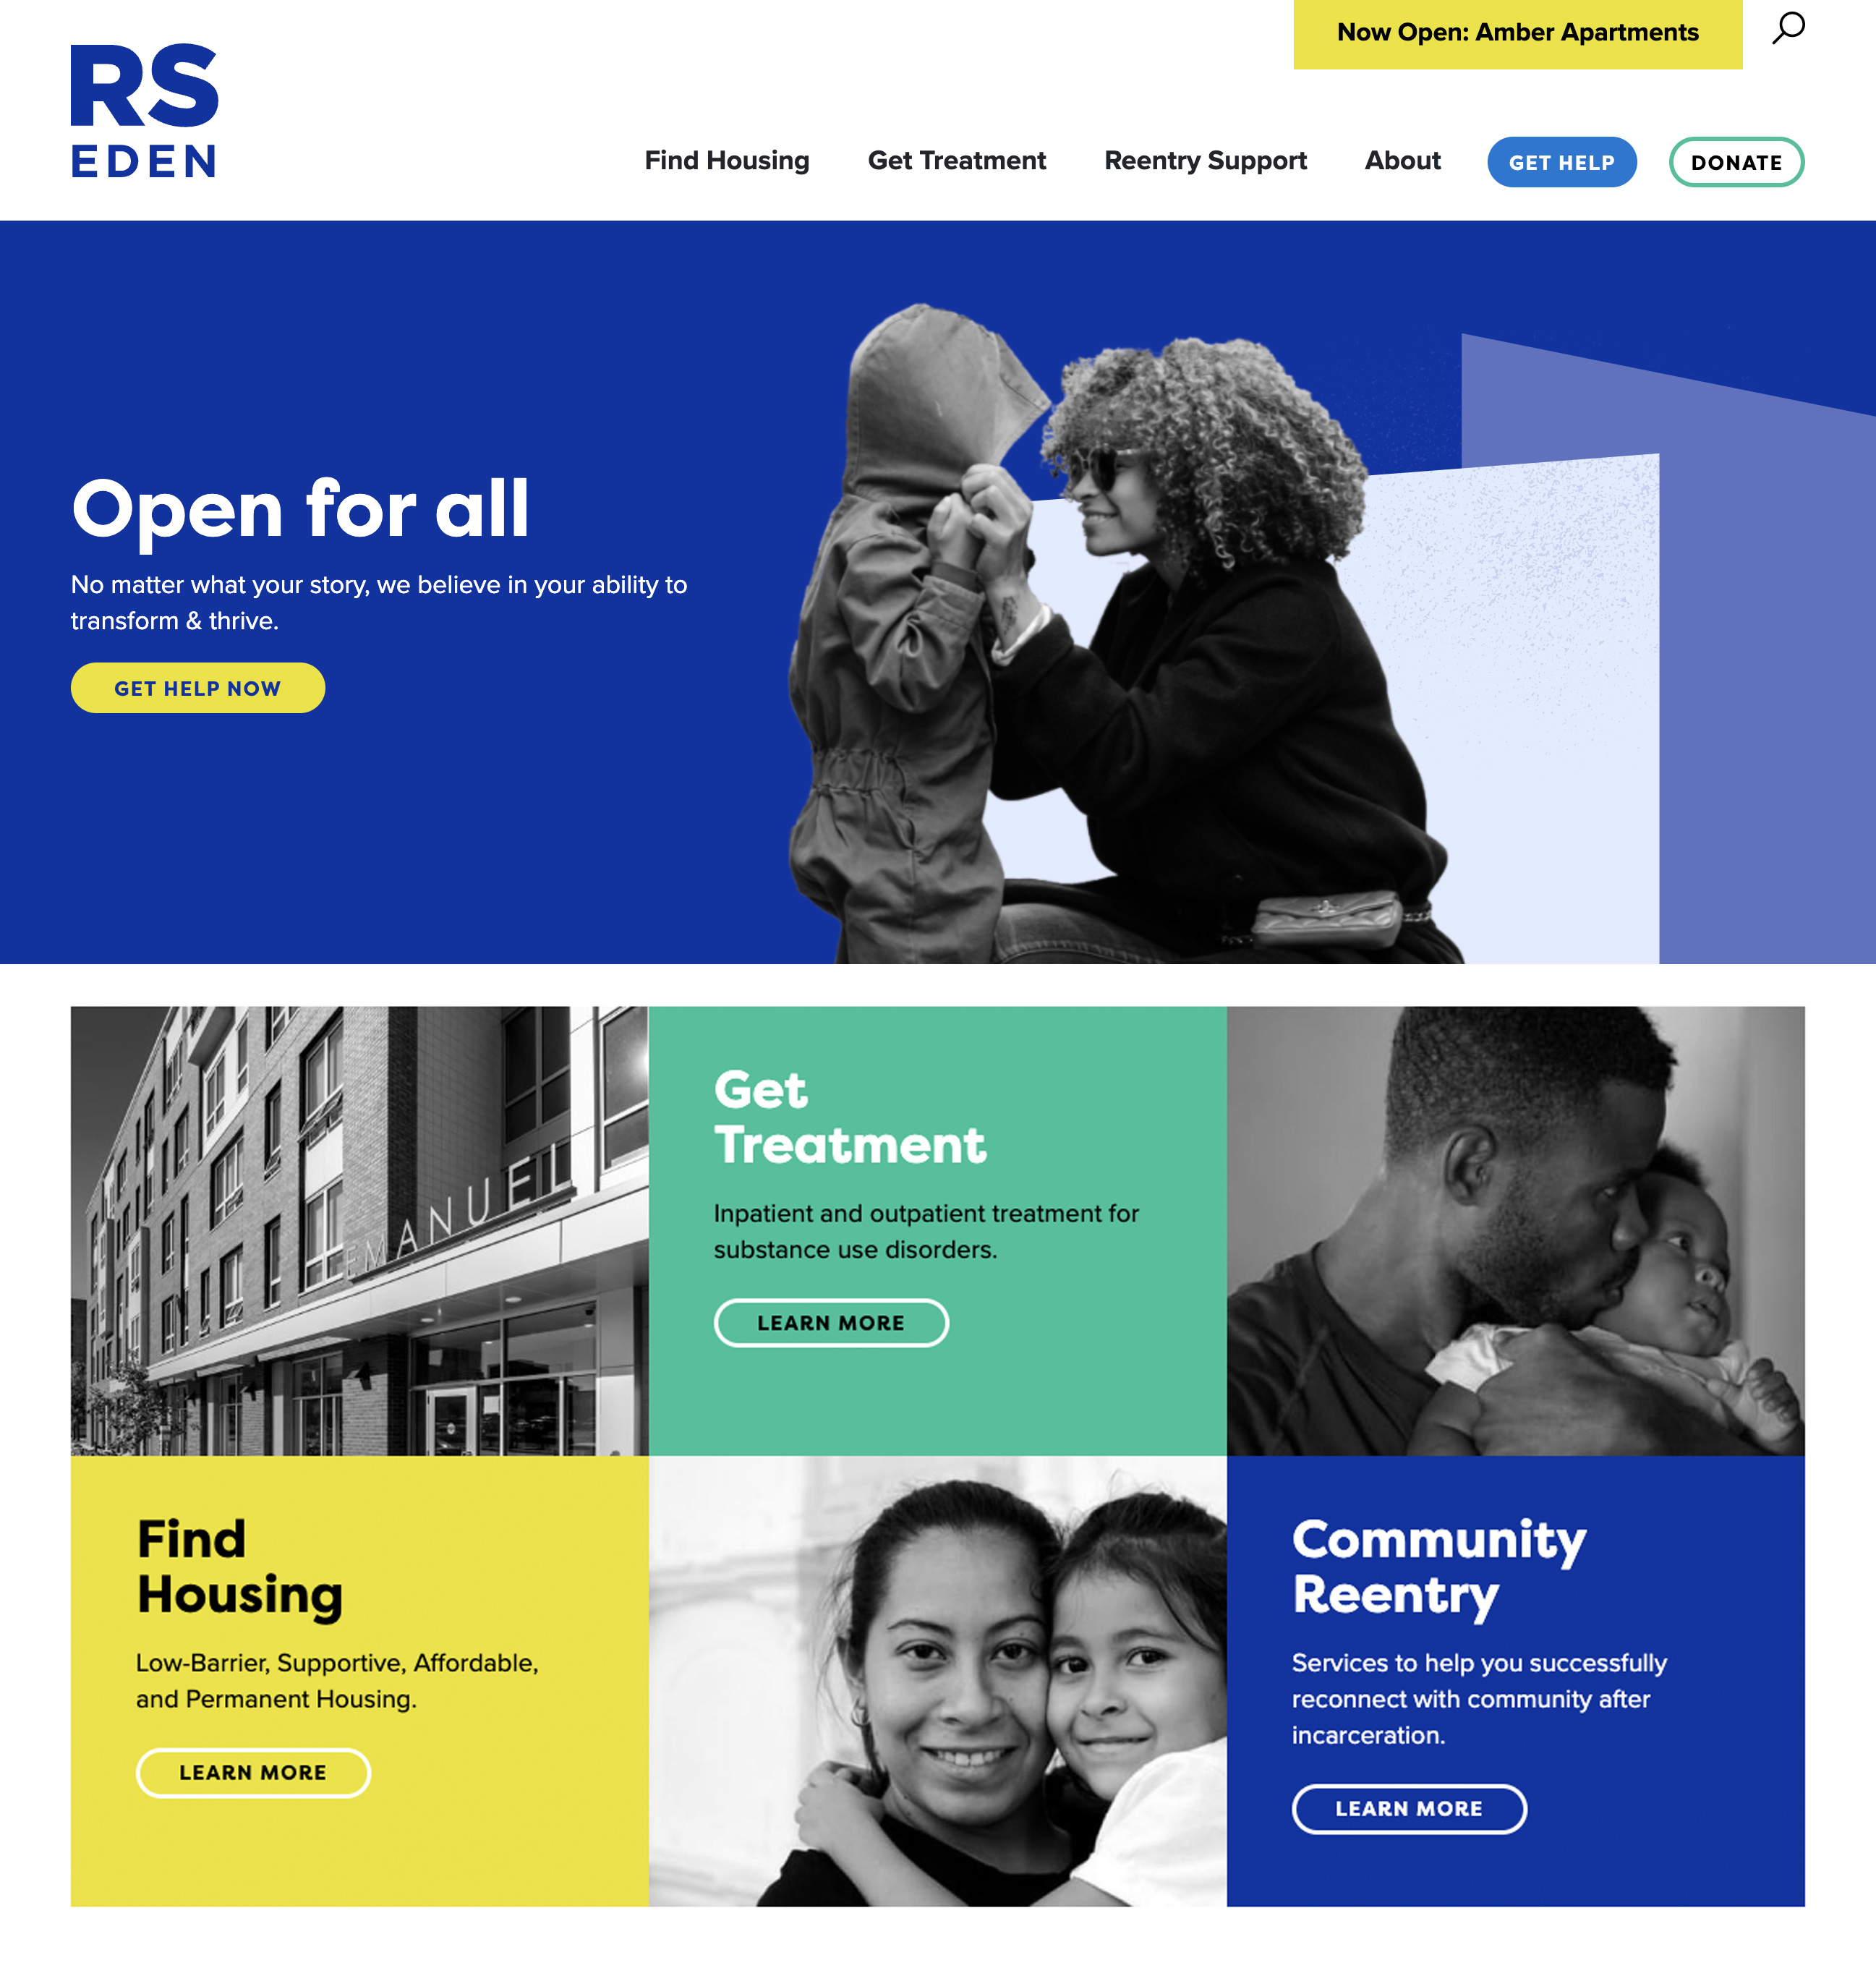 RS EDEN homepage screenshot